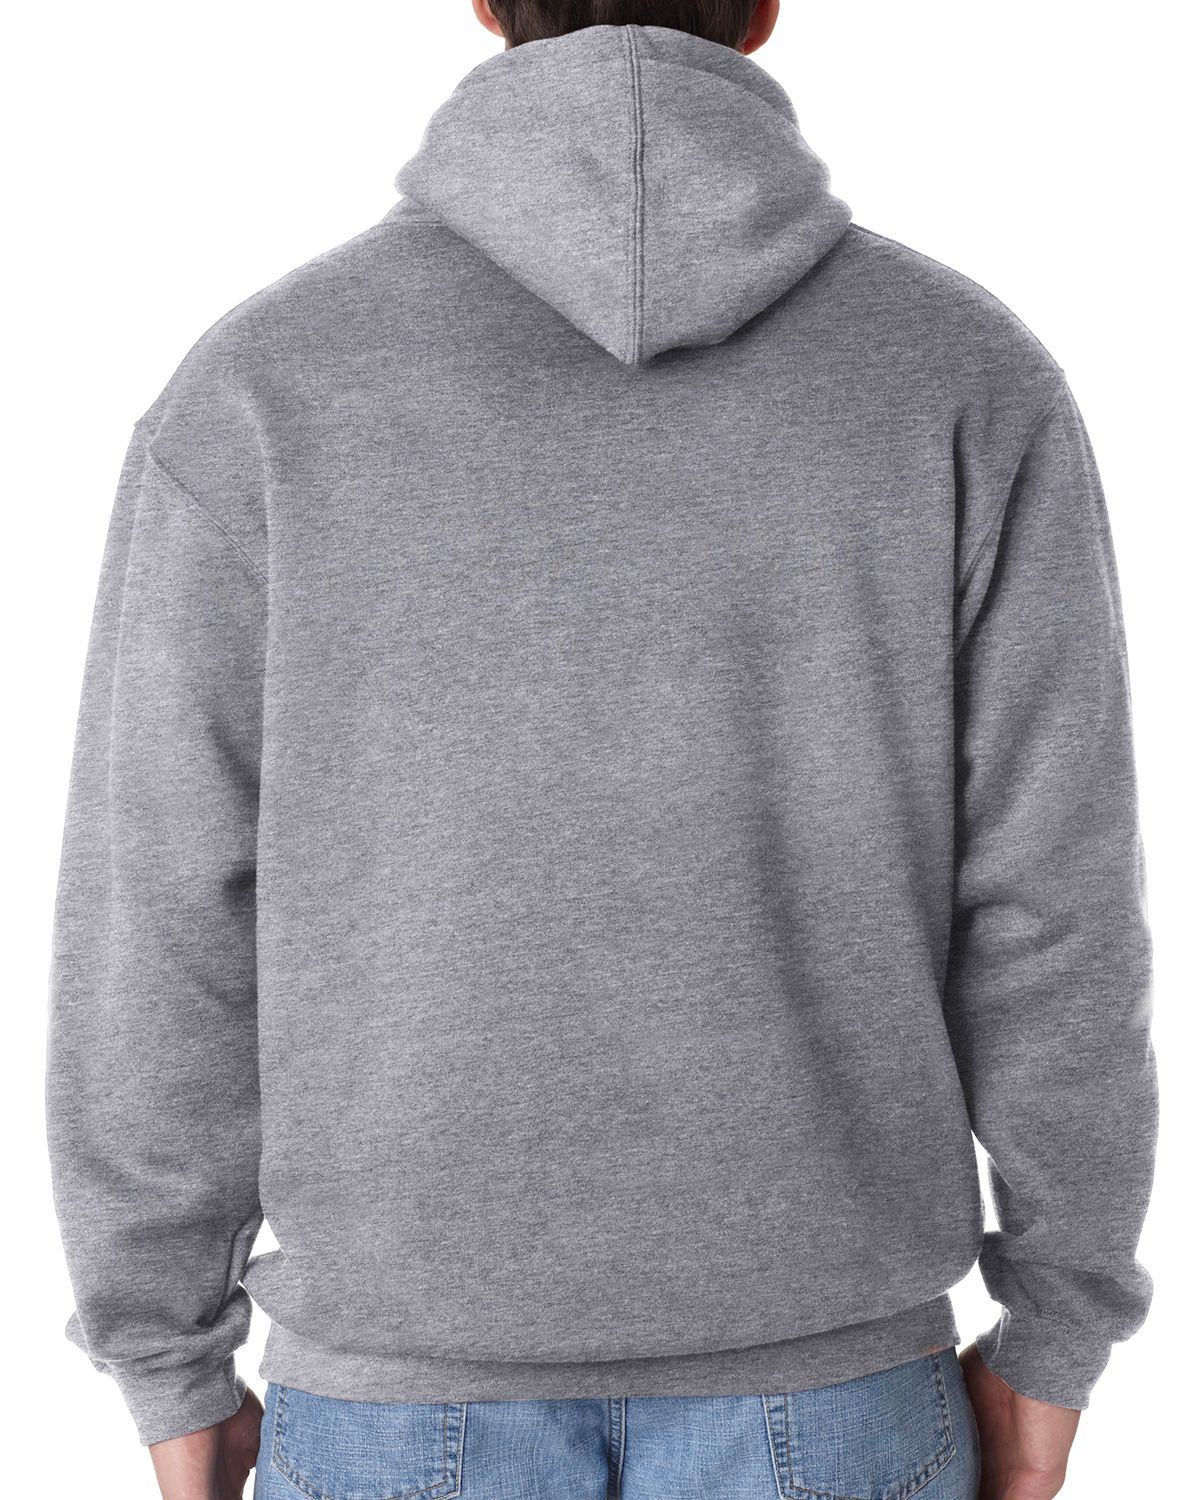 Bayside BA960 Adult Pullover Hooded Sweatshirt - Apparelnbags.com